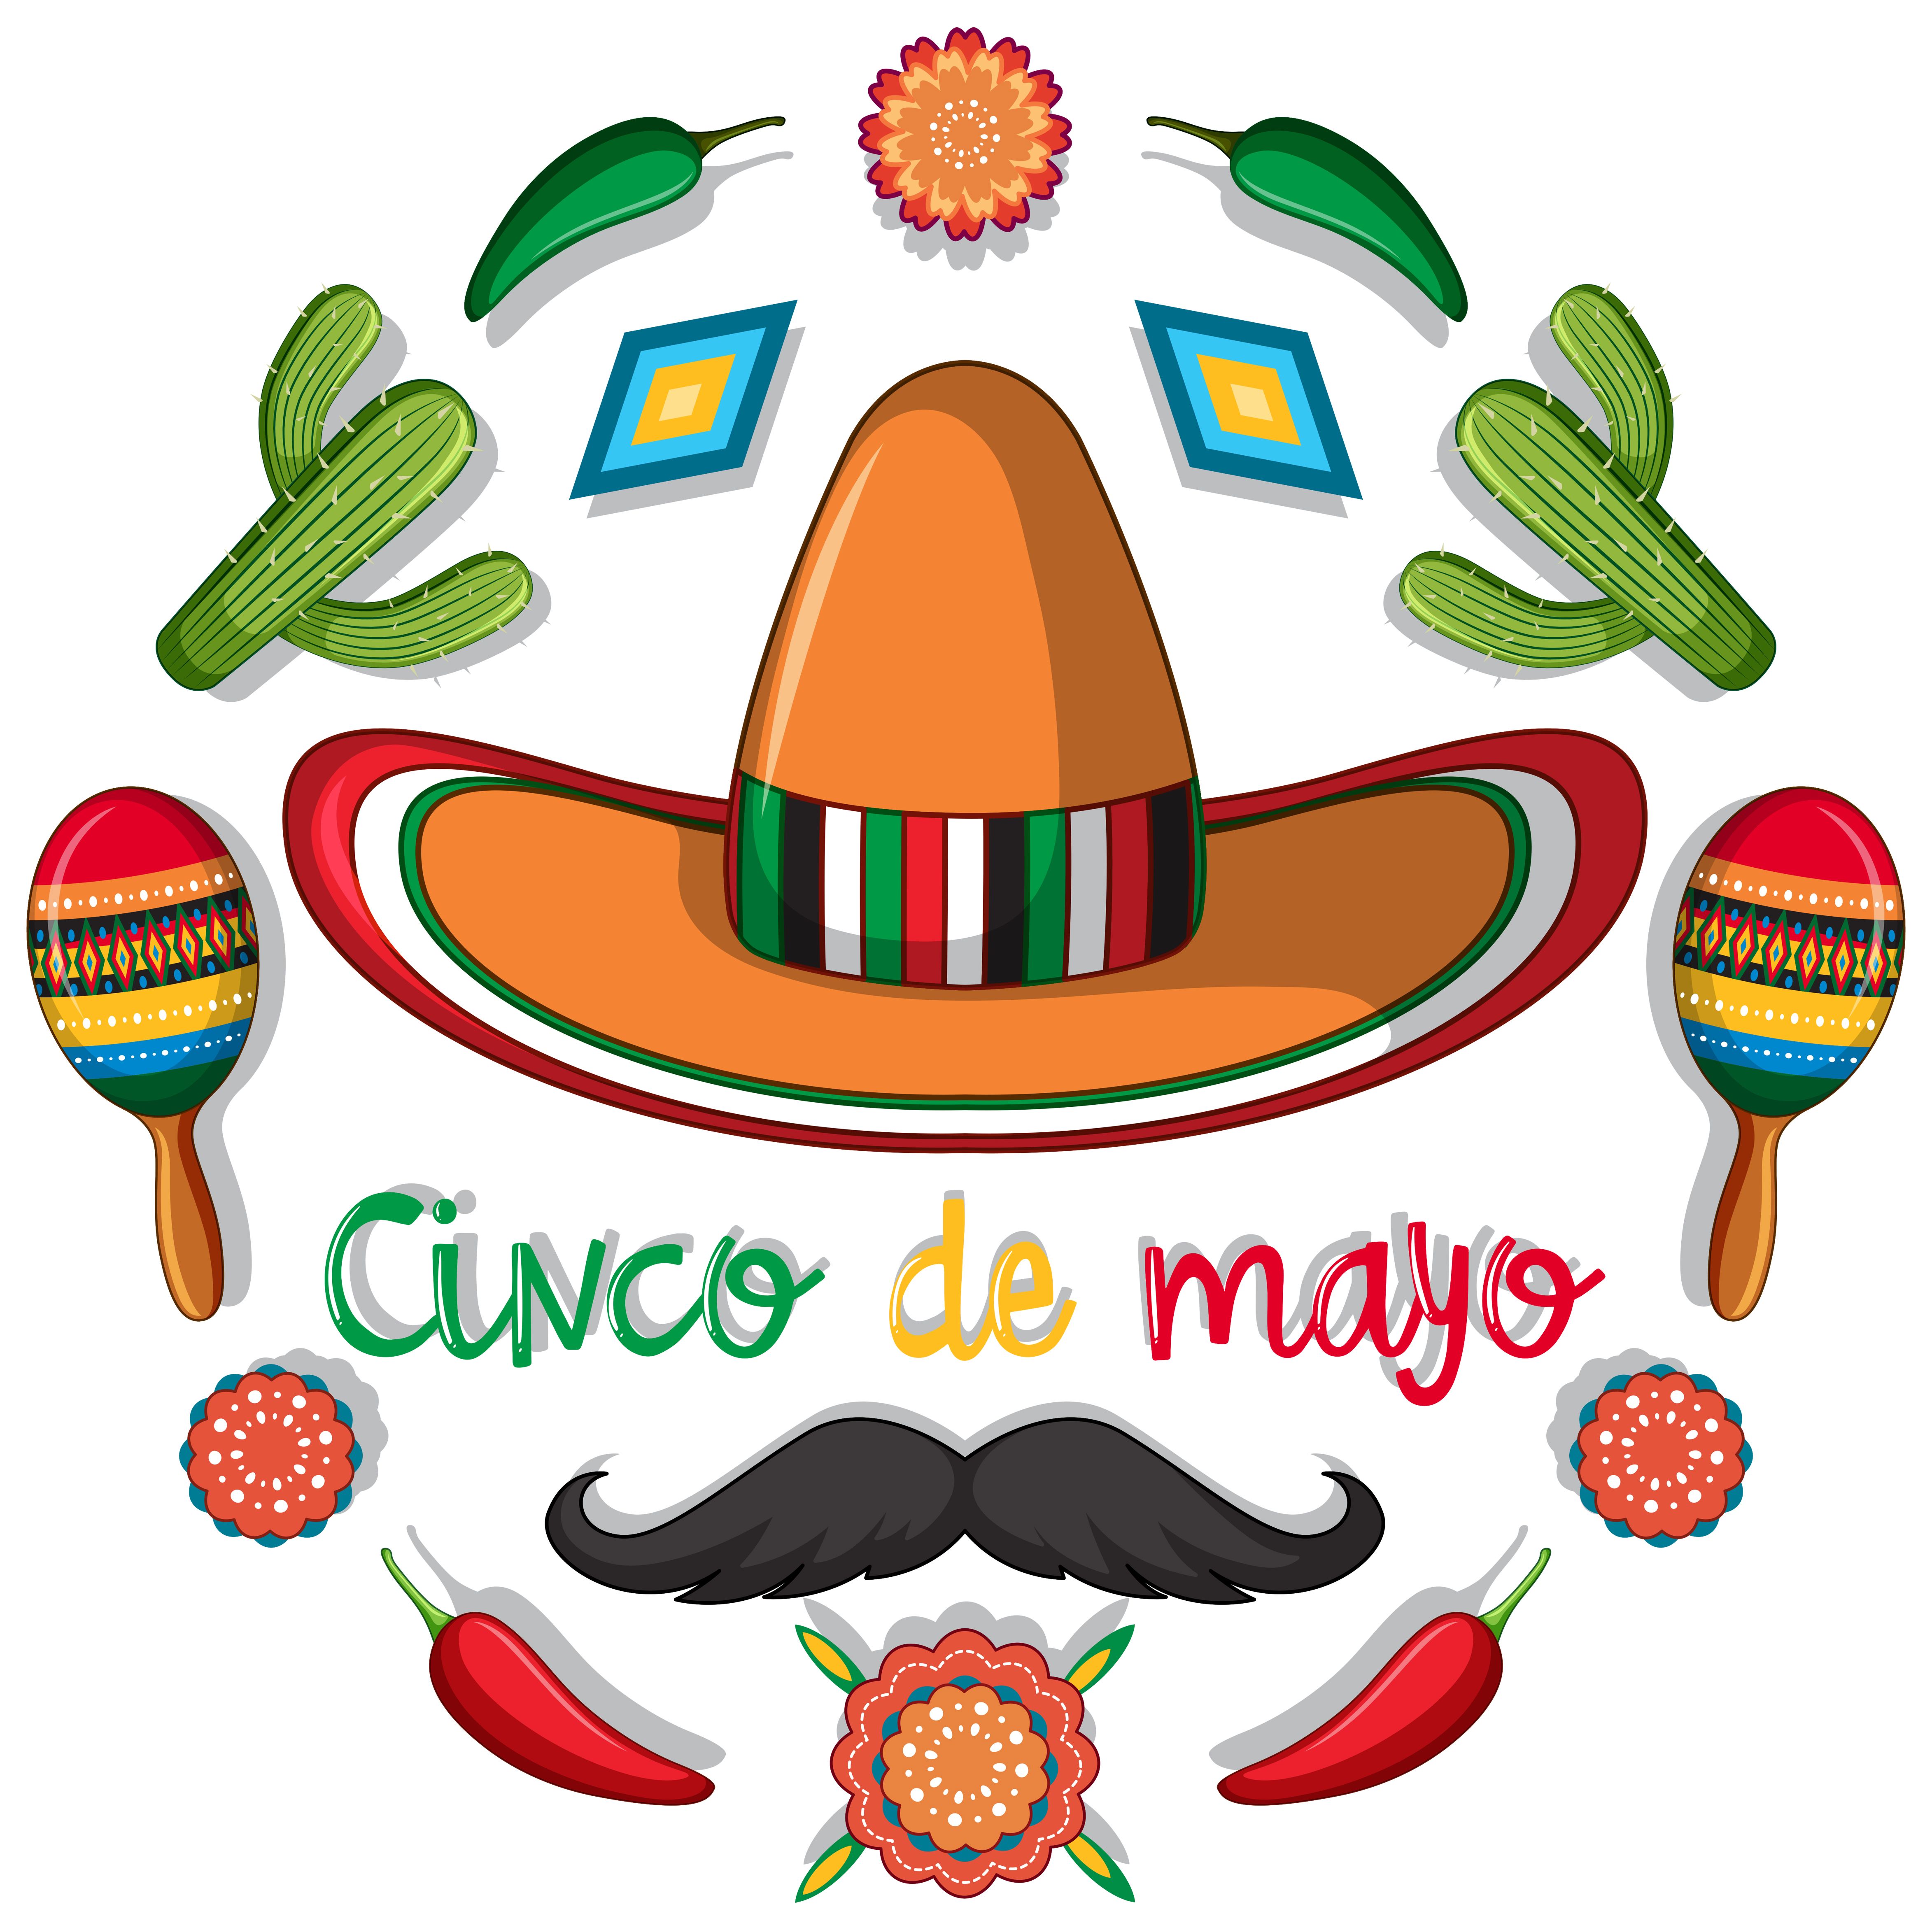 Cinco de mayo card with mexican decorations